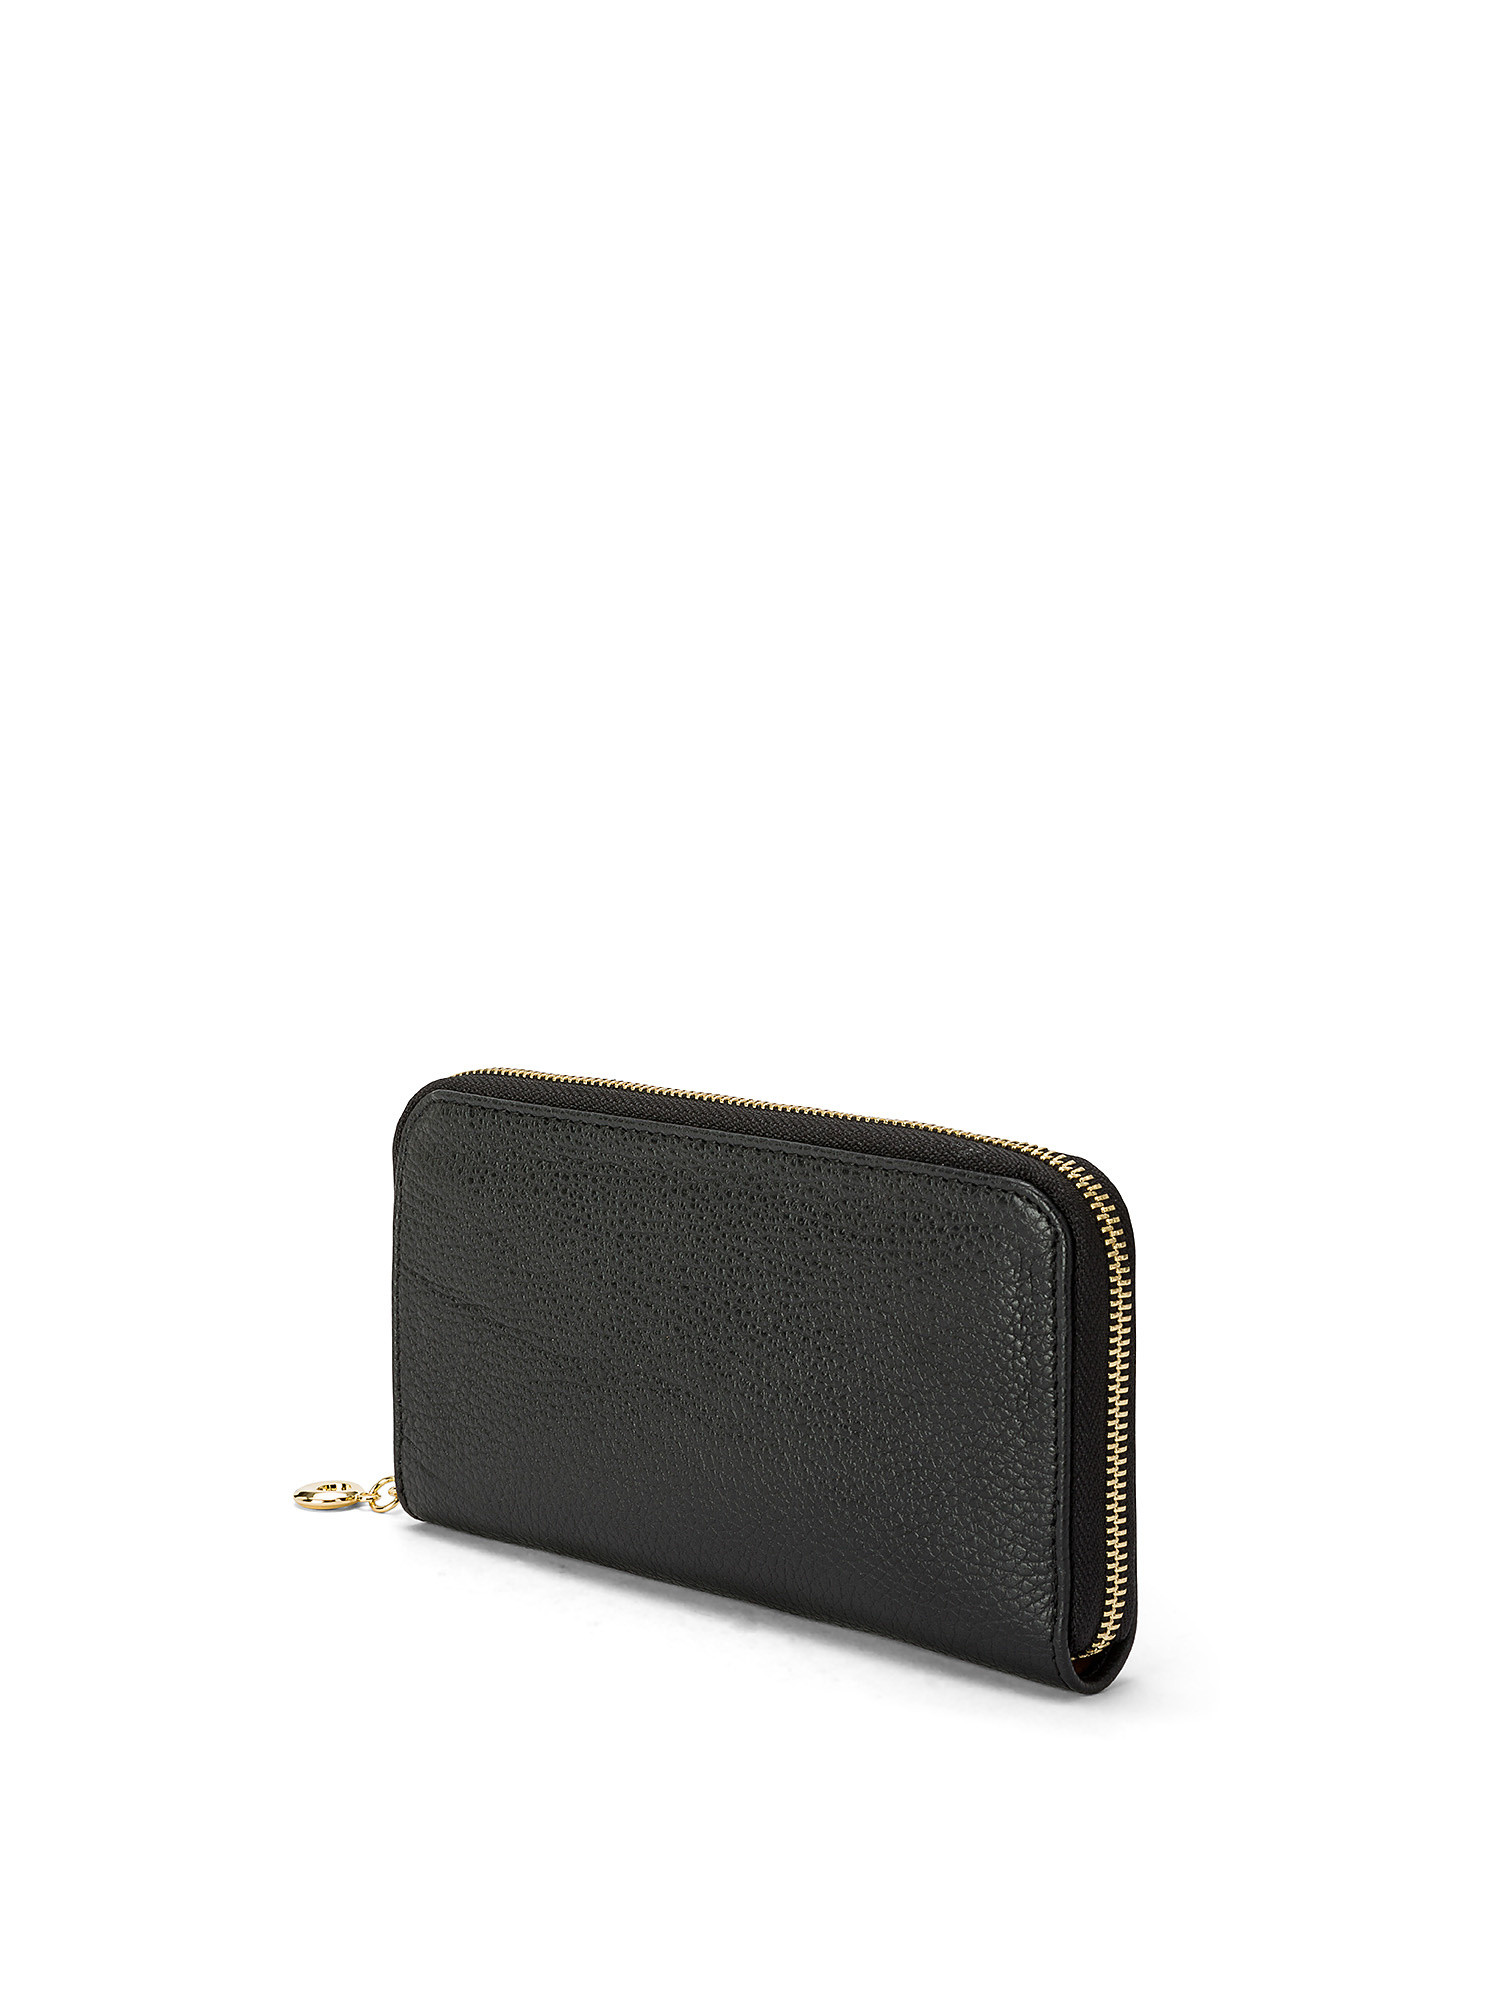 Koan - Genuine leather wallet with zip, Black, large image number 1